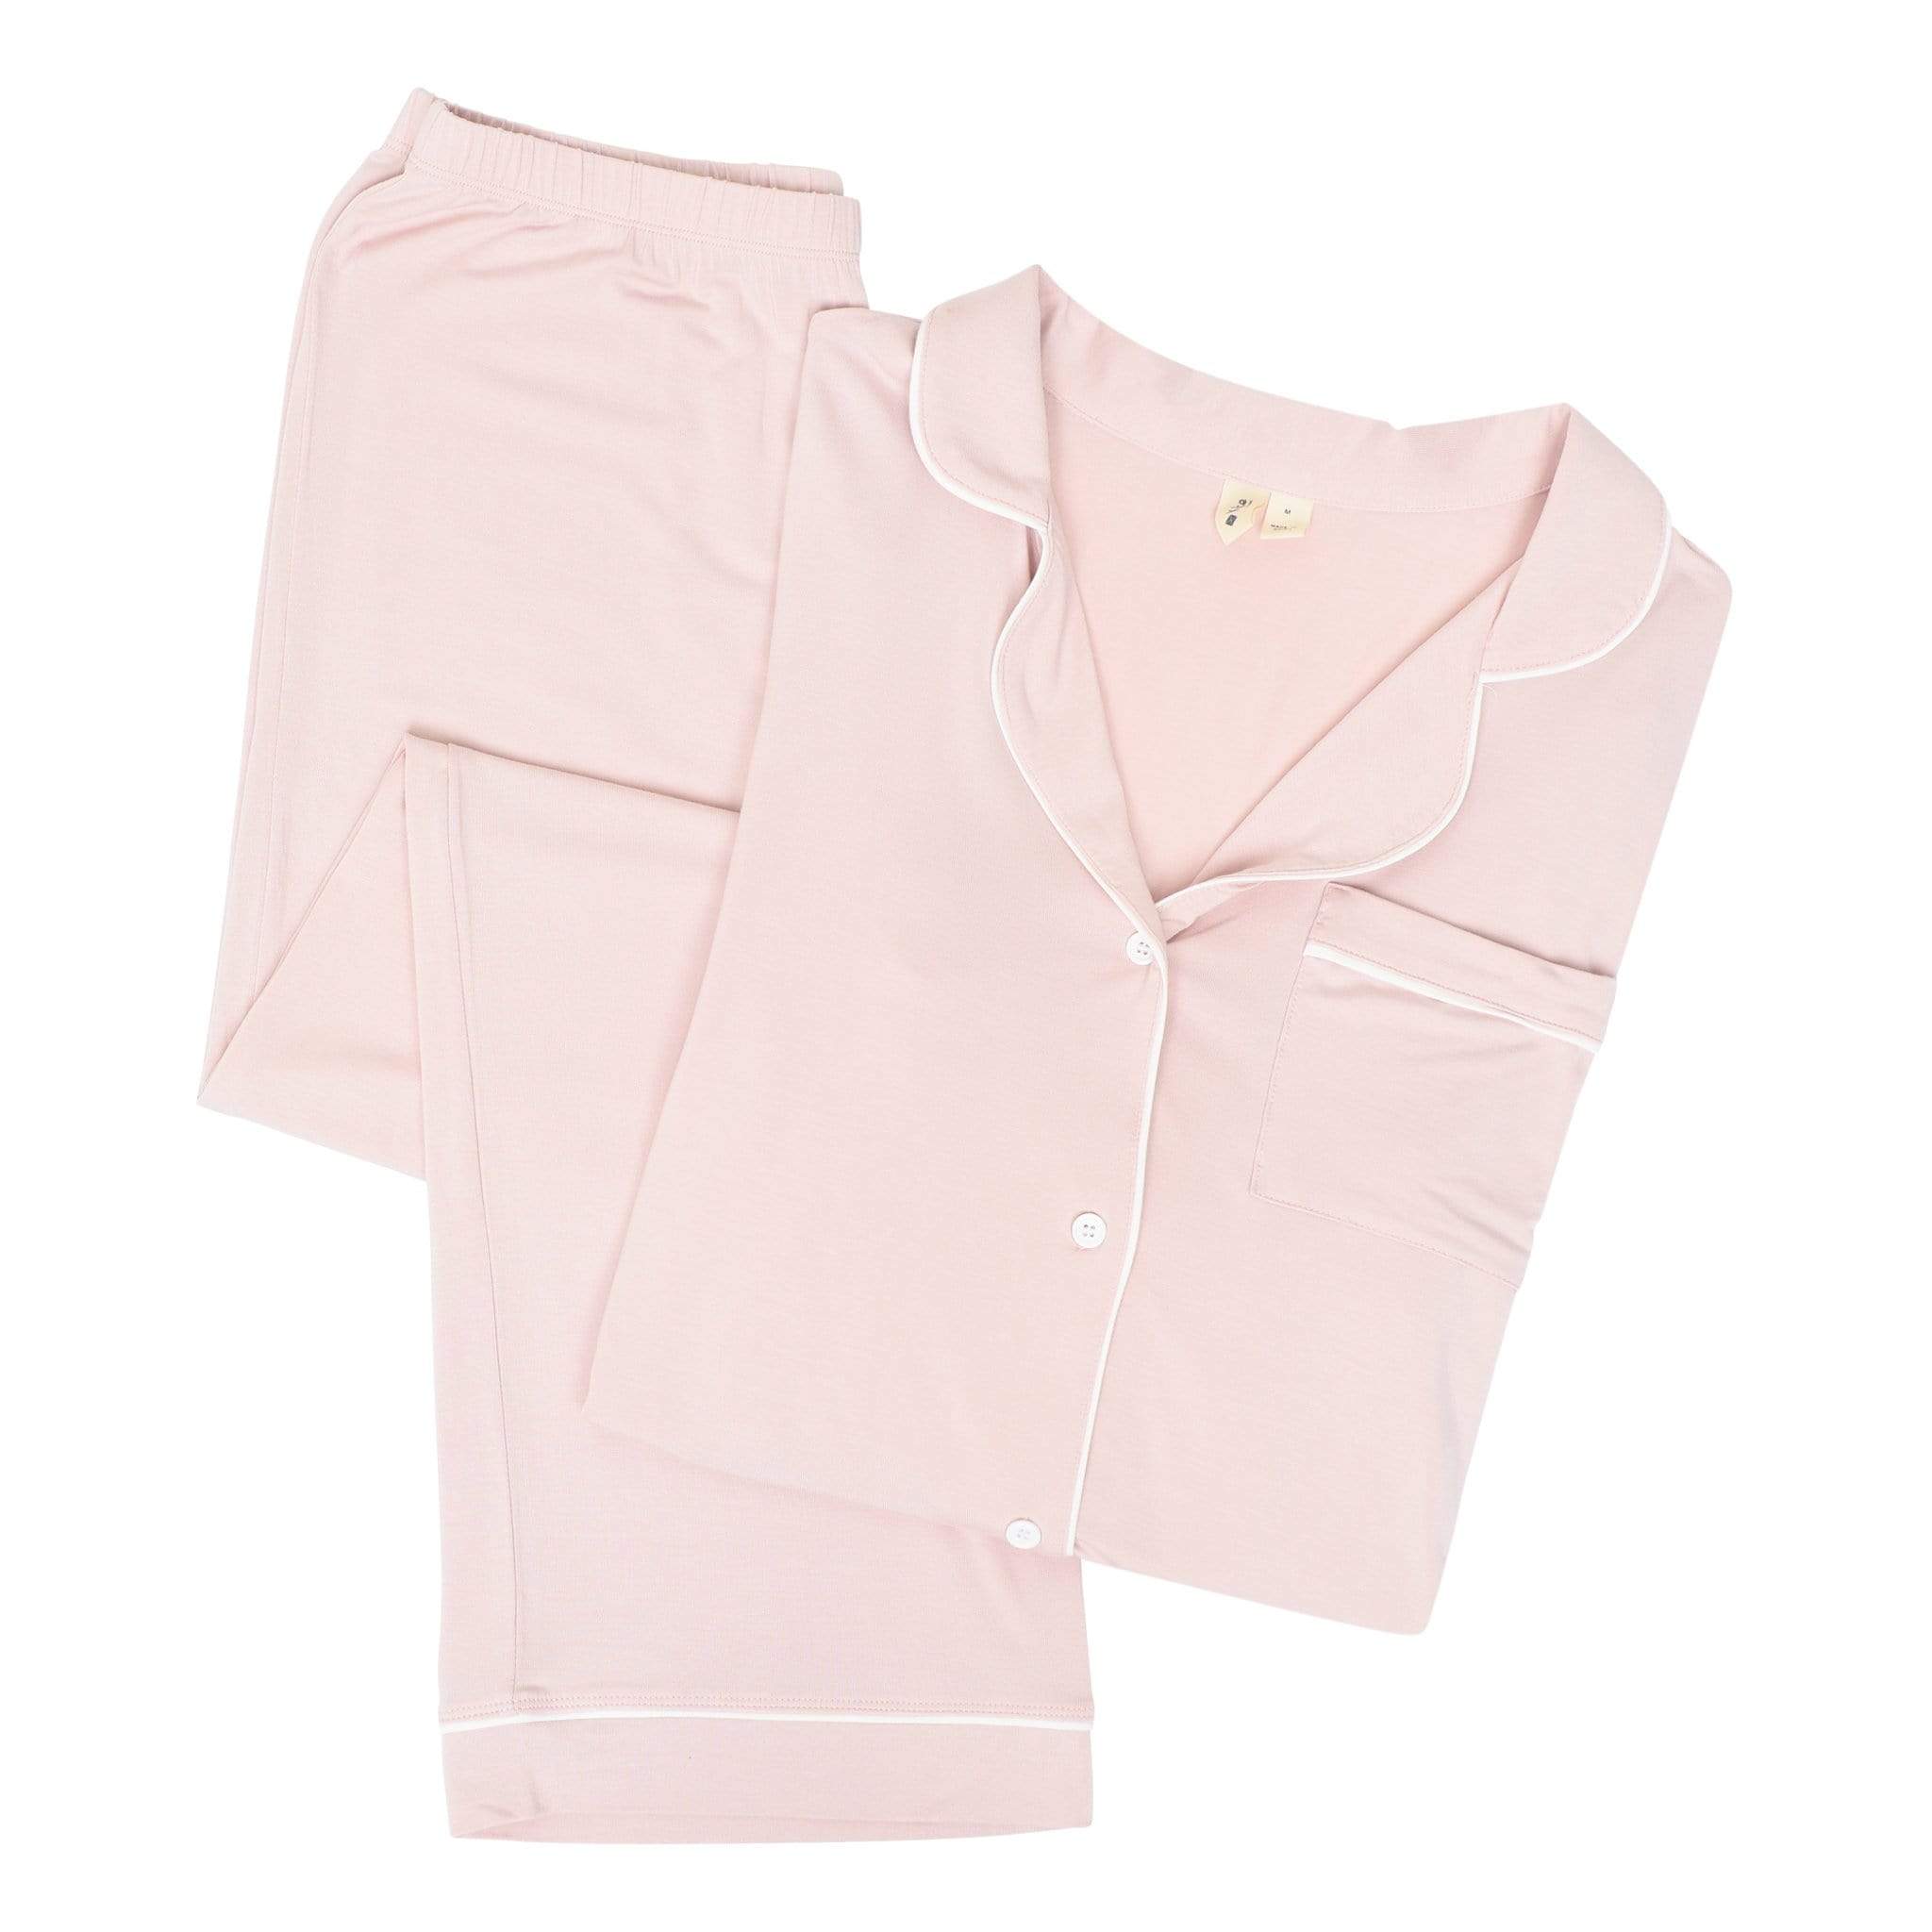 Kyte BABY Women’s Long Sleeve Pajama Set Blush with Cloud Trim / XS Women's Long Sleeve Pajama Set in Blush with Cloud Trim